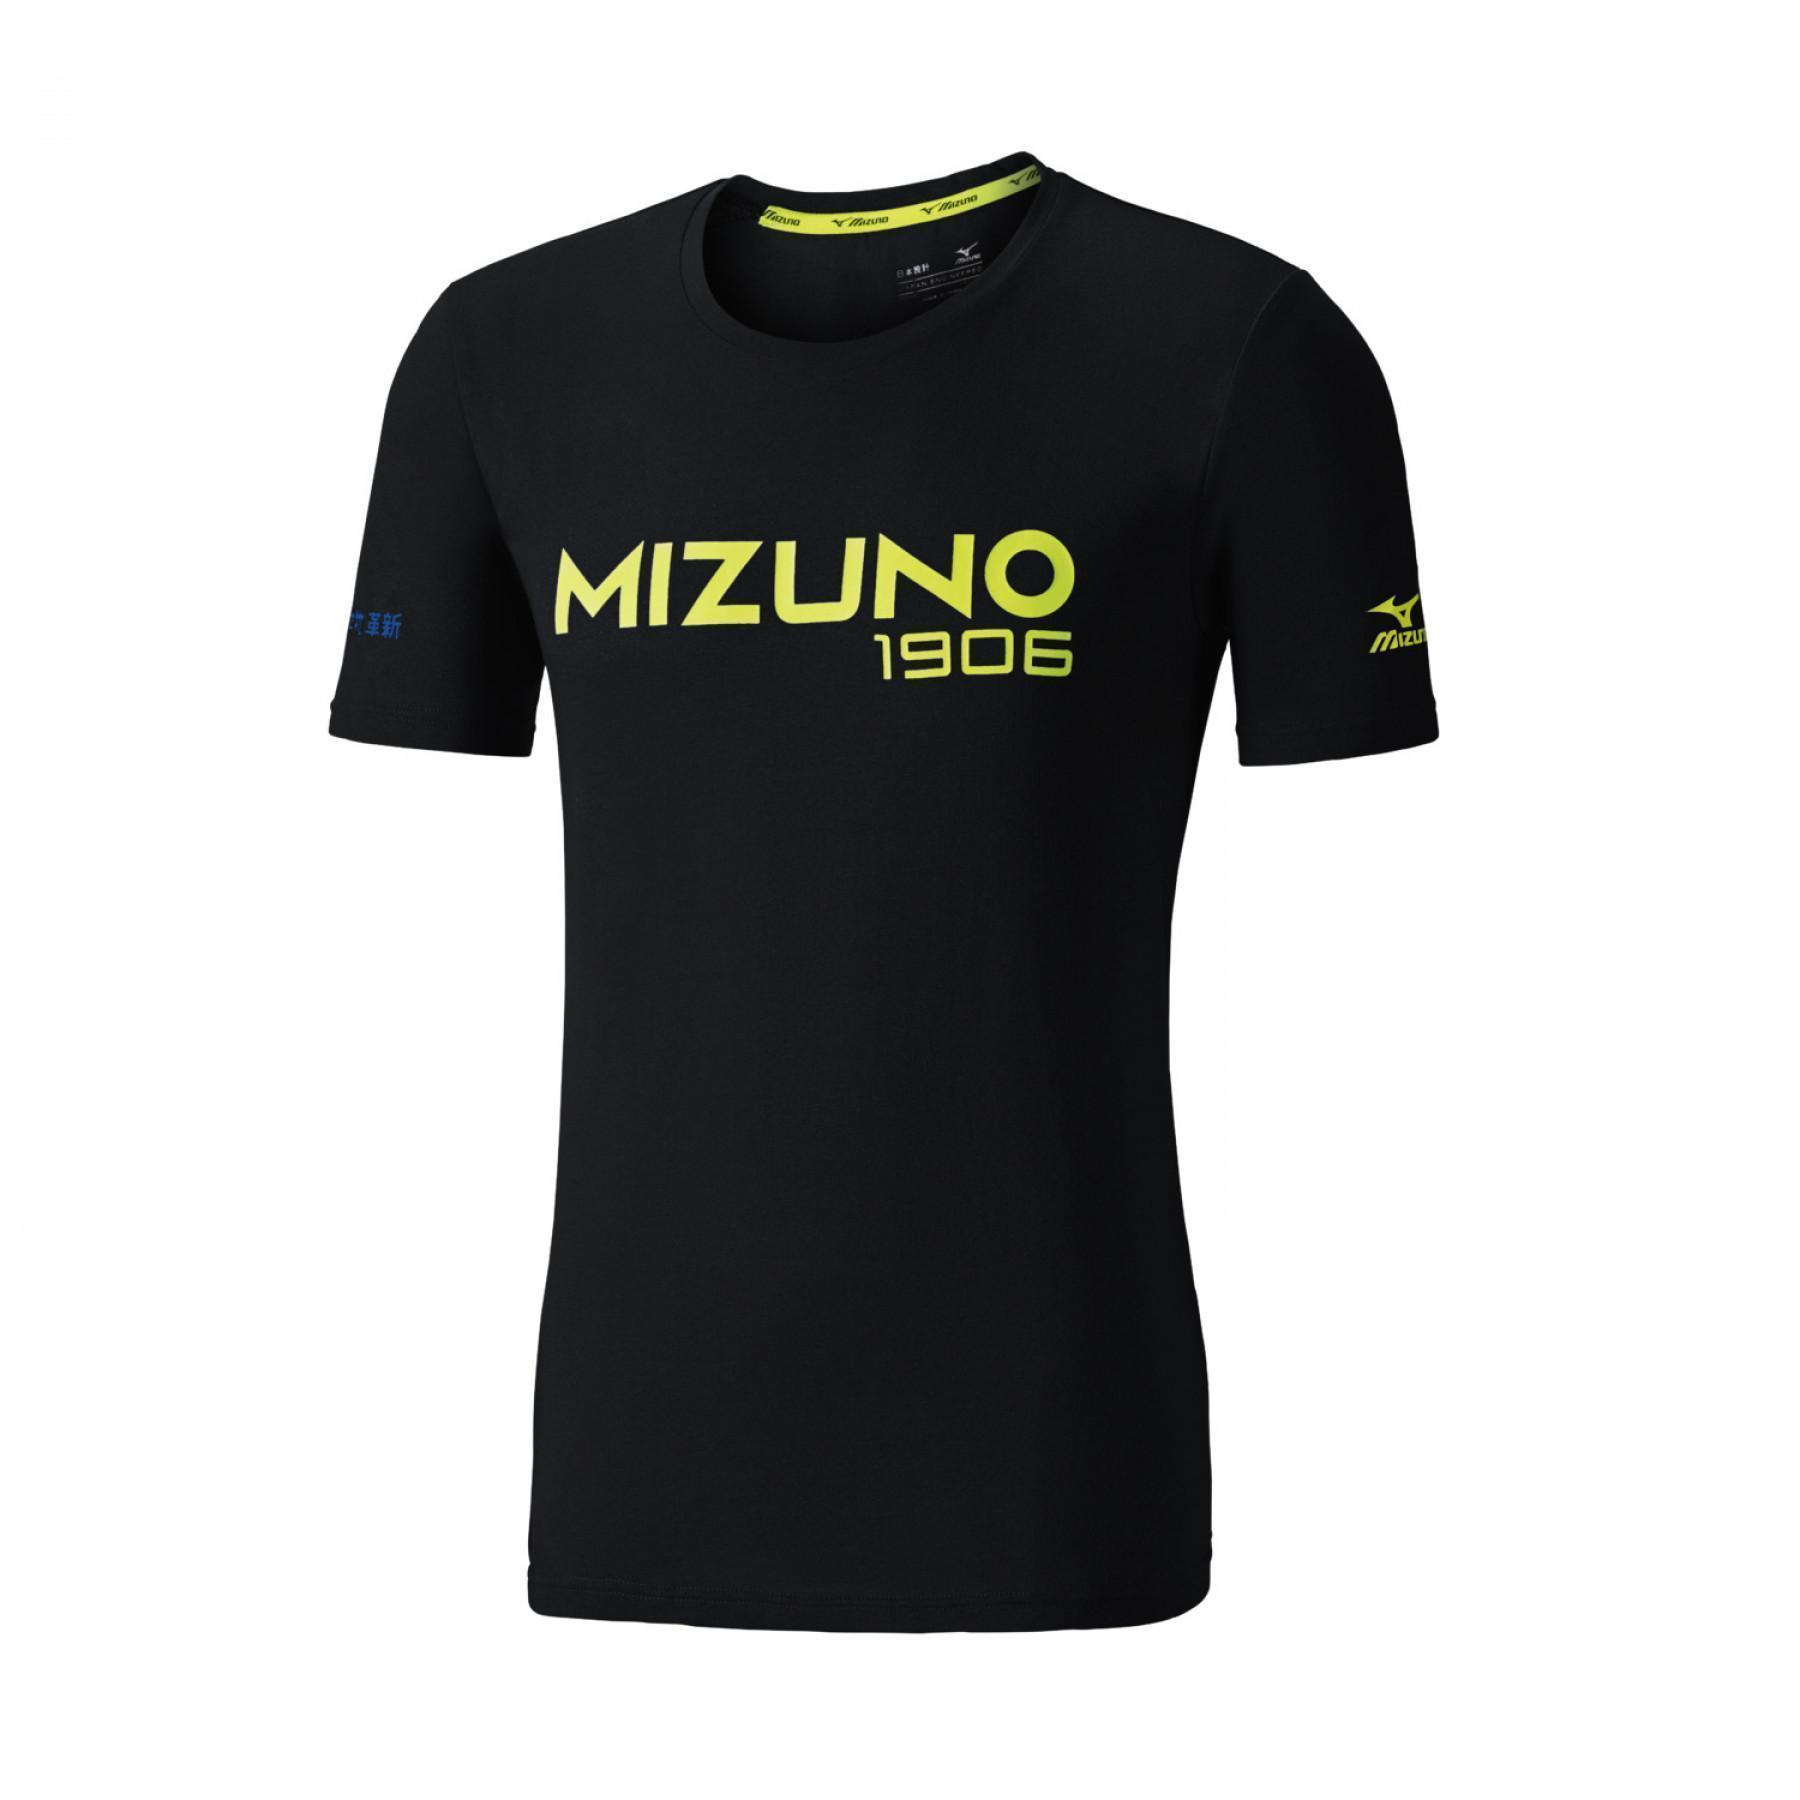 T-shirt Mizuno heritage